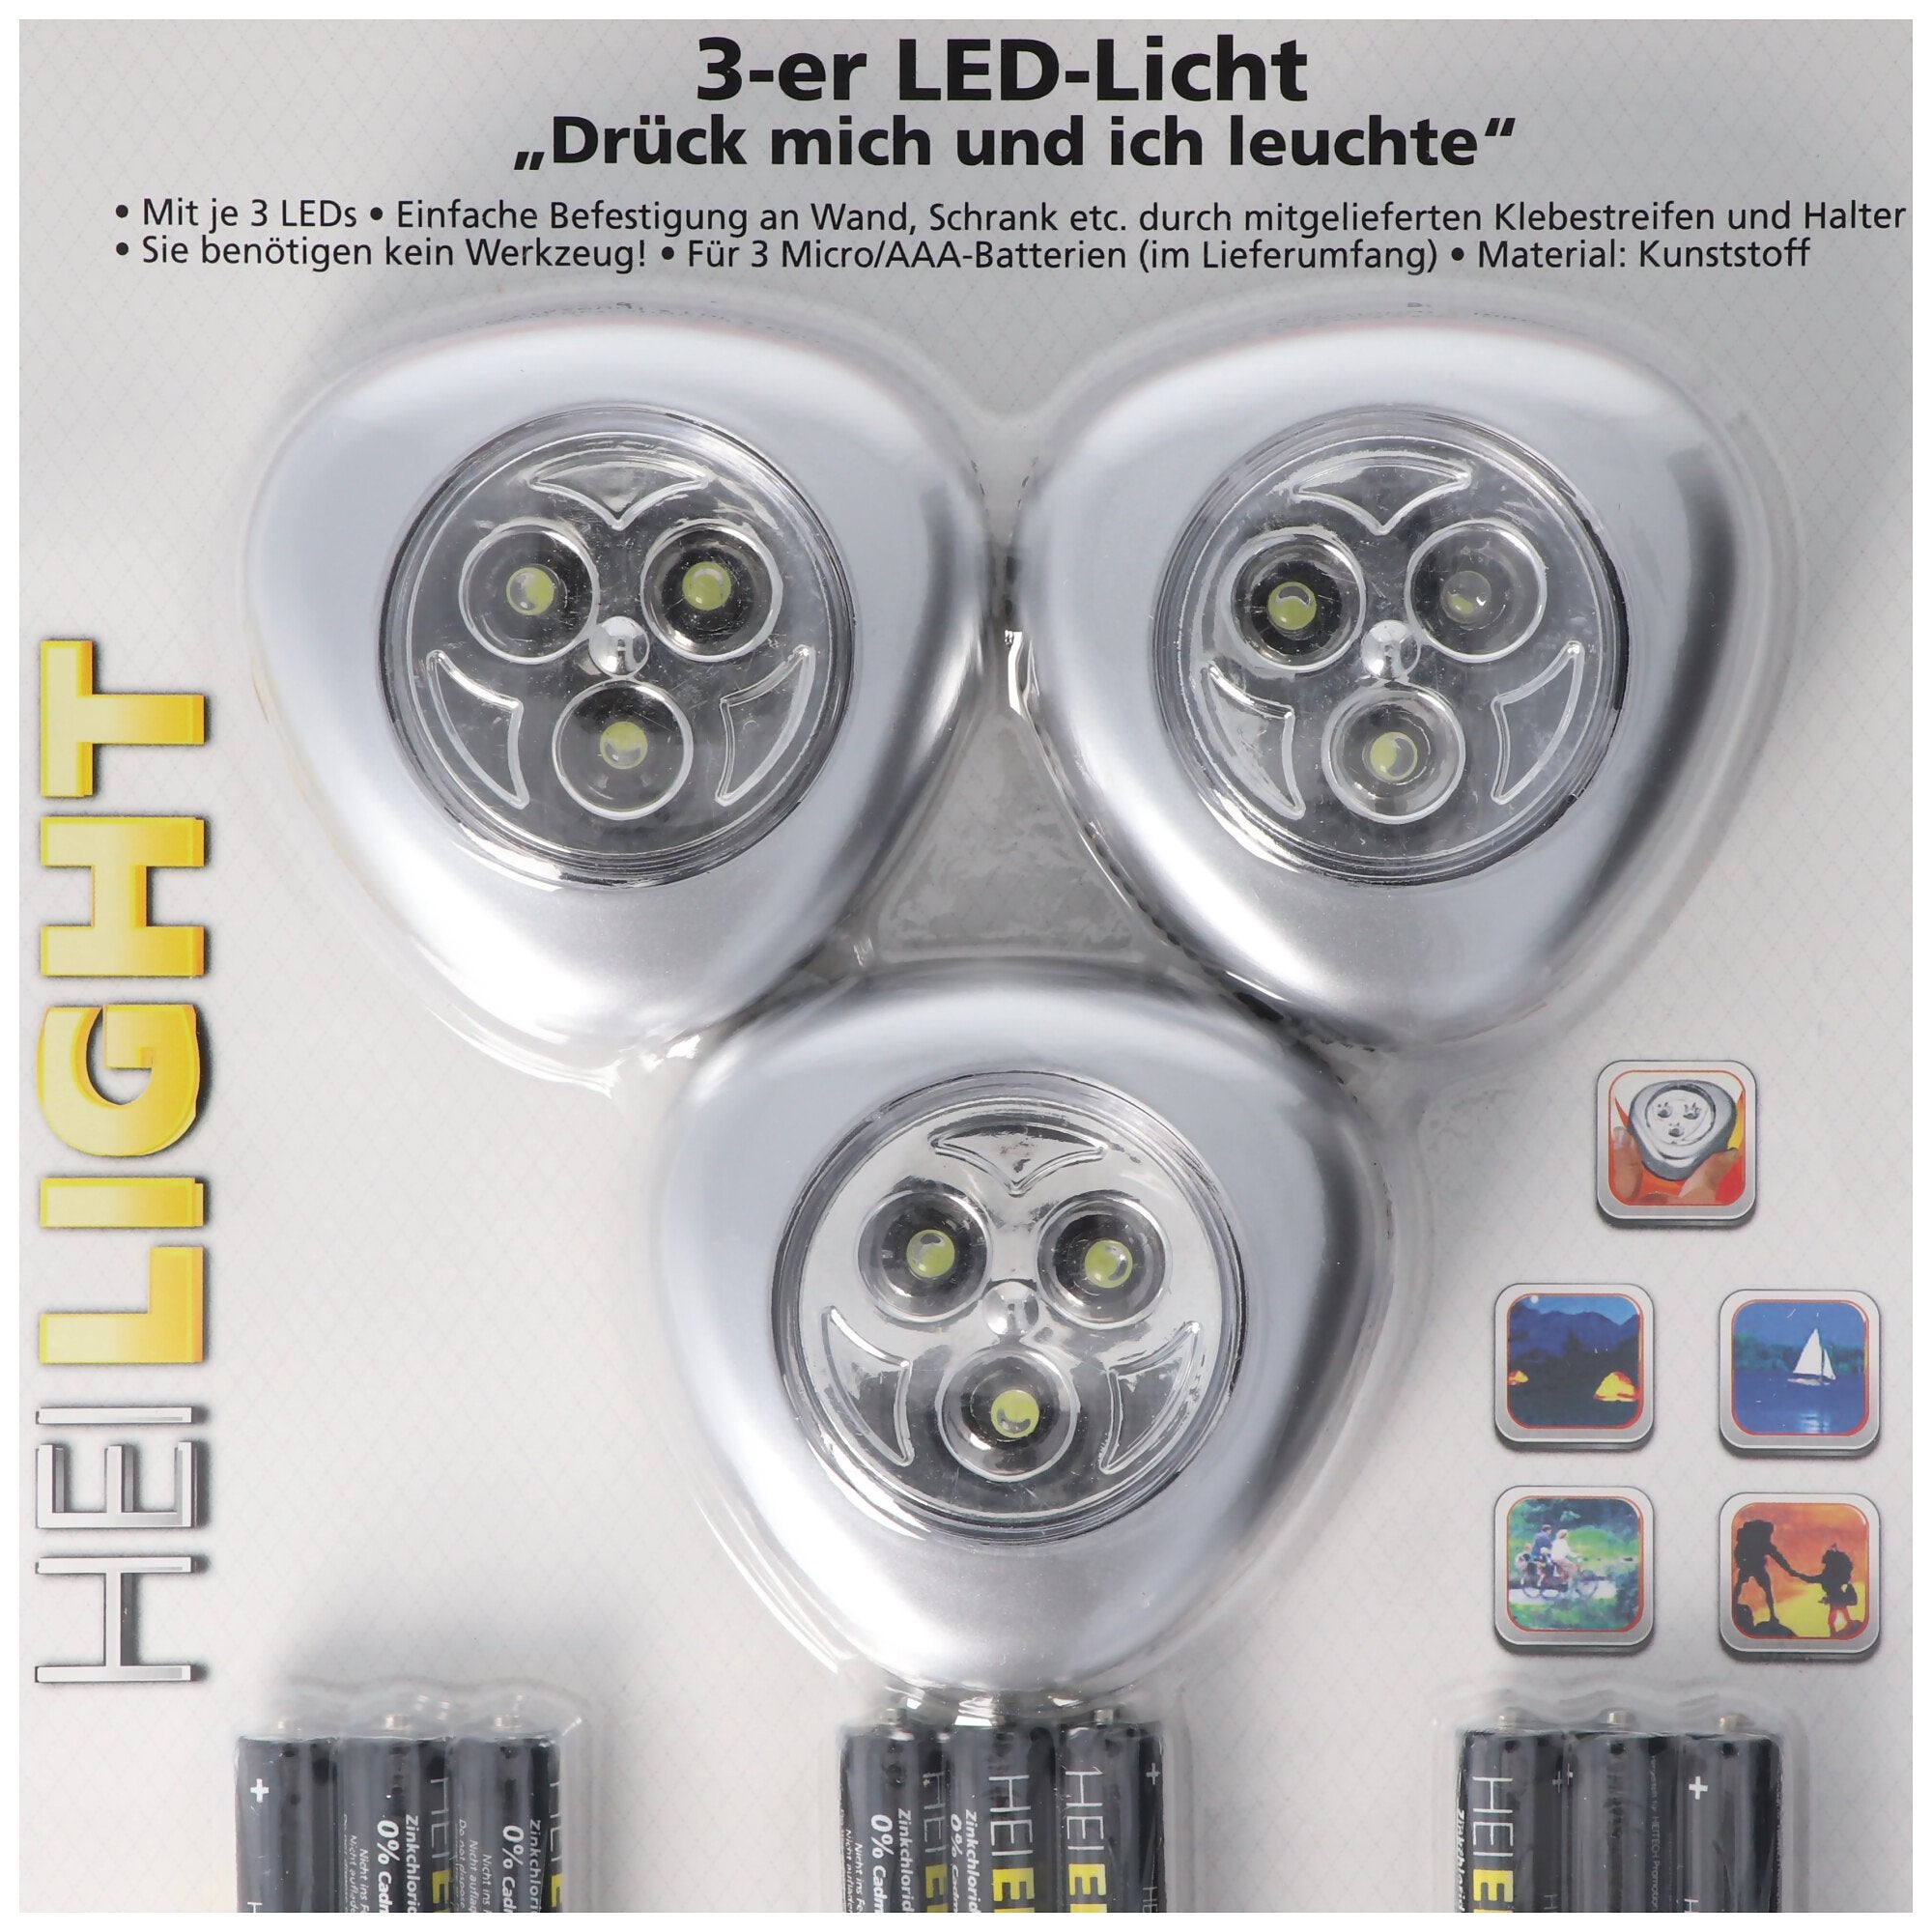 LED light set of 3, press me and I light up, mini LED lights, wireless, batteries included